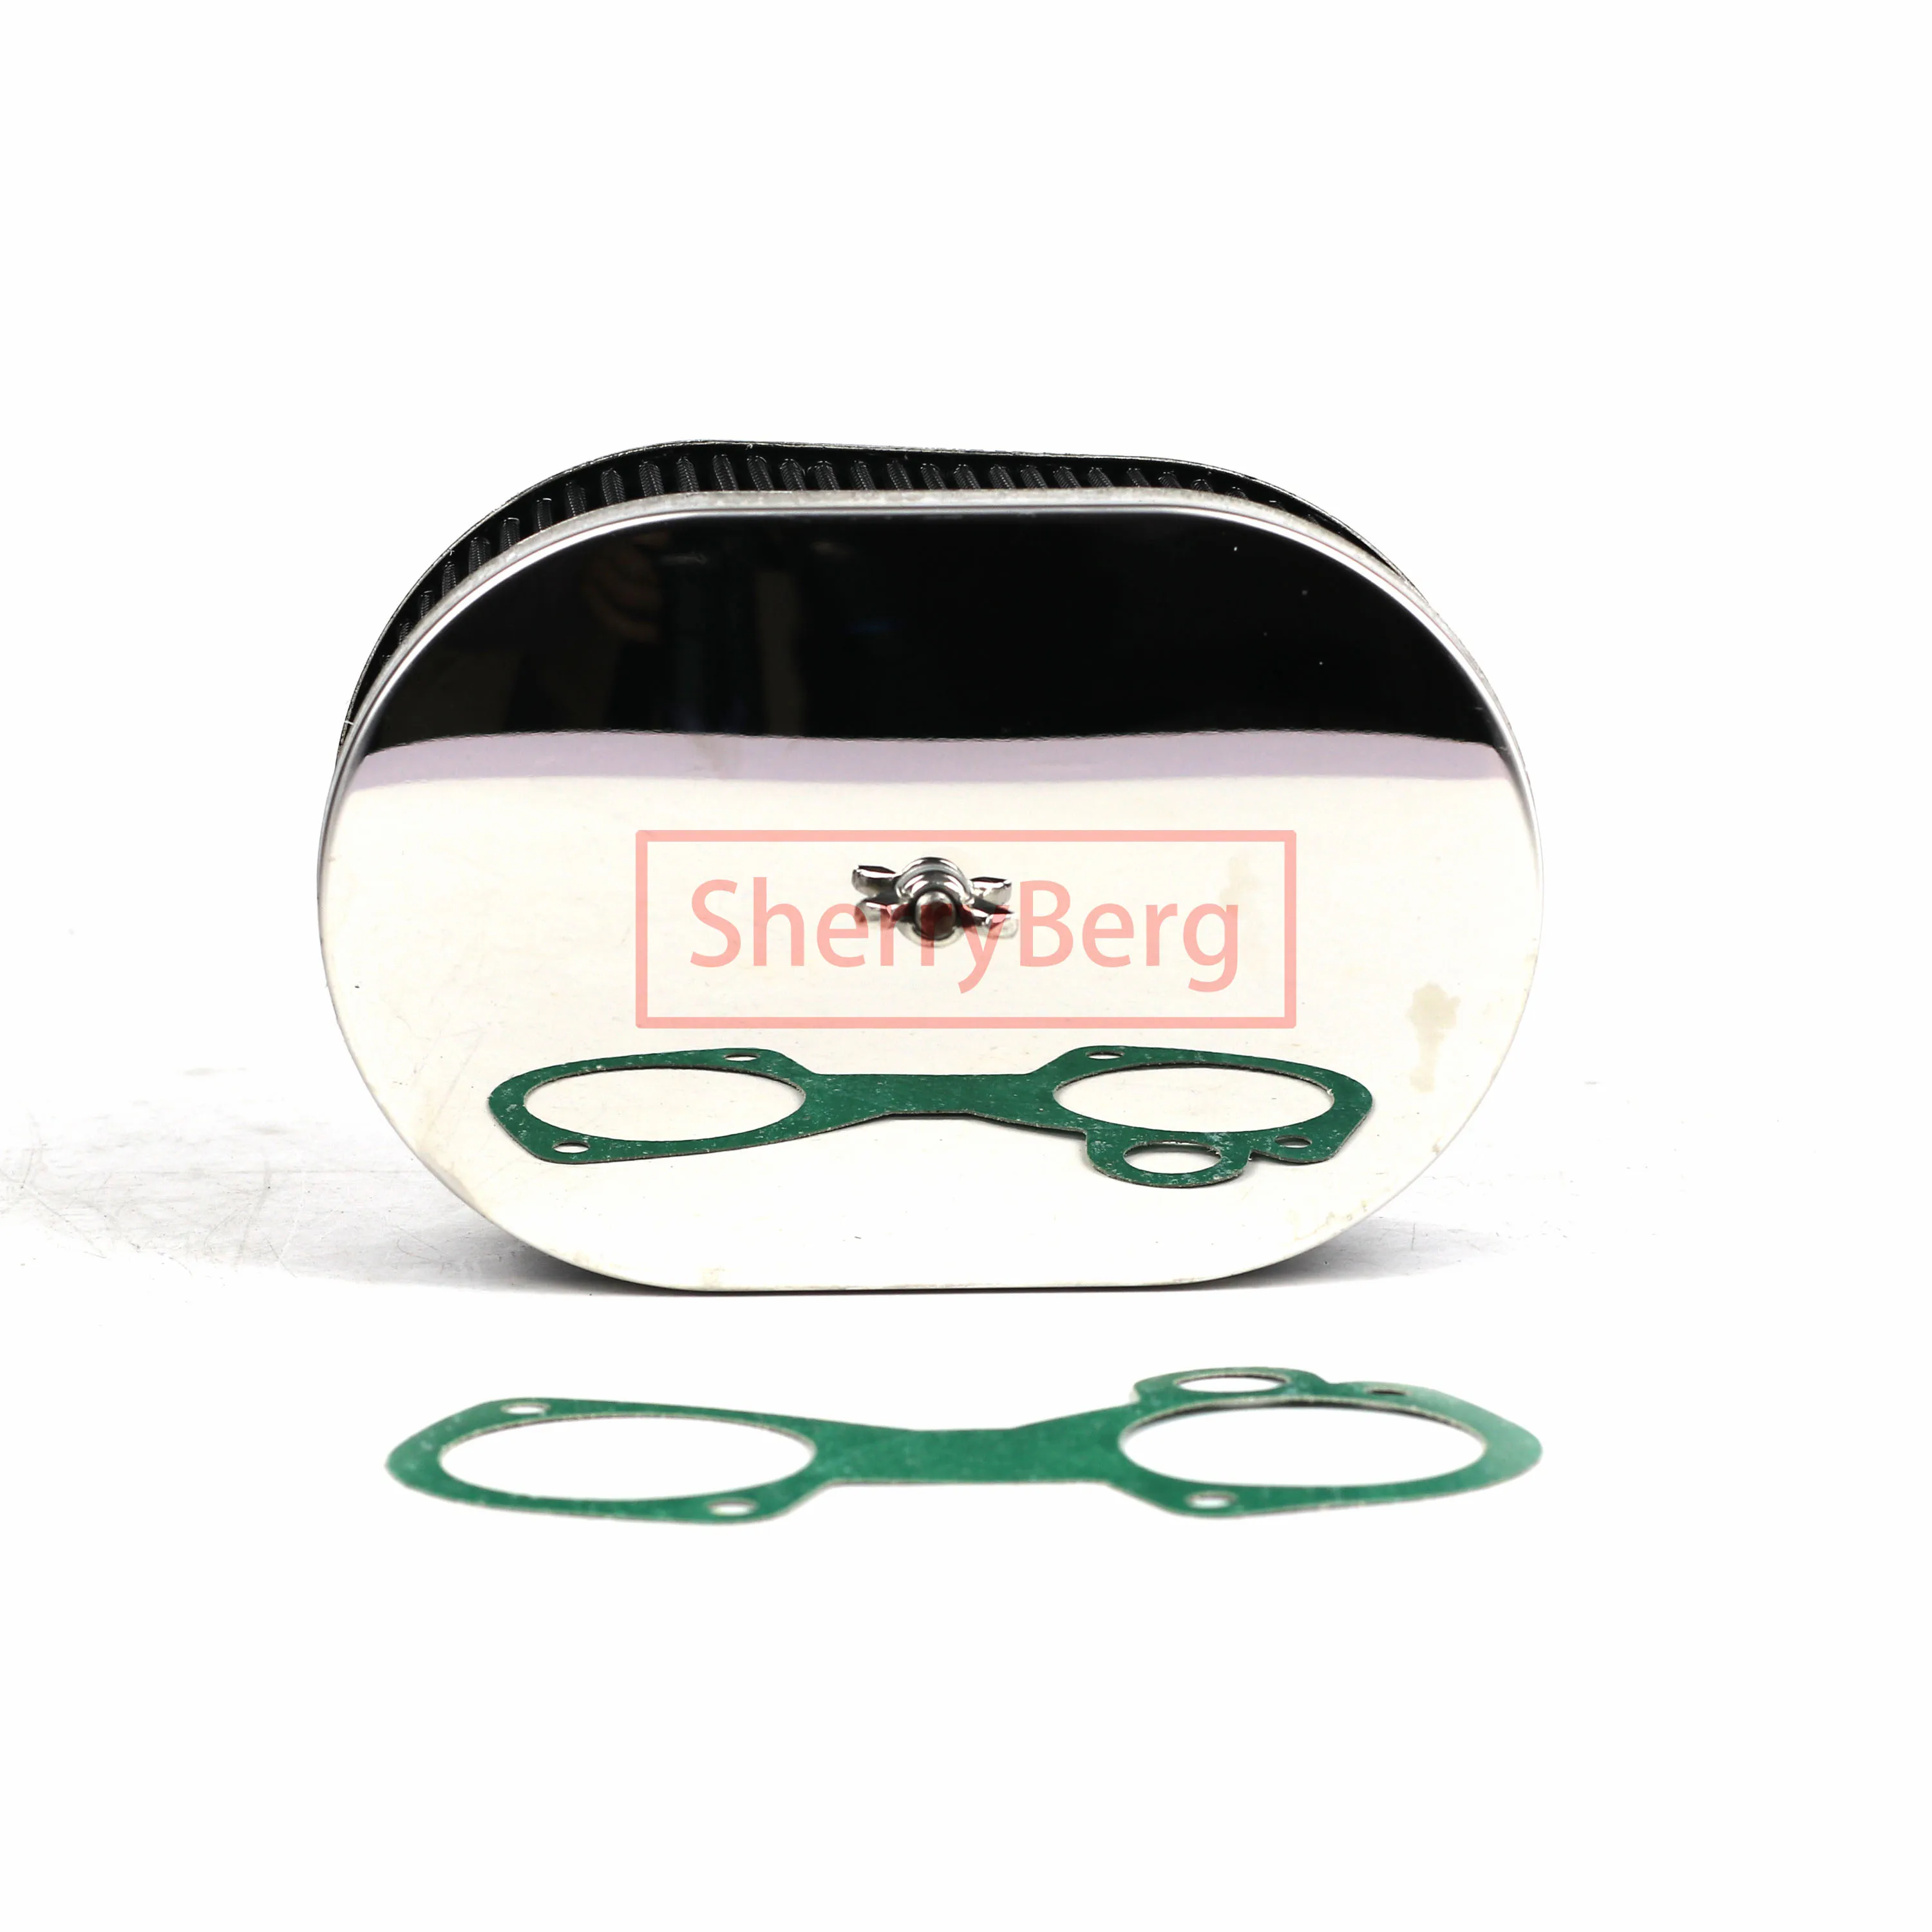 SherryBerg FAJS EMPI AIR FILTER 65mm 2"1/2 cleaner FOR Weber 40 45 48 50 DCOE,Solex ADDHE,Dellorto DHLA CARBURETOR CARB FILTER images - 6